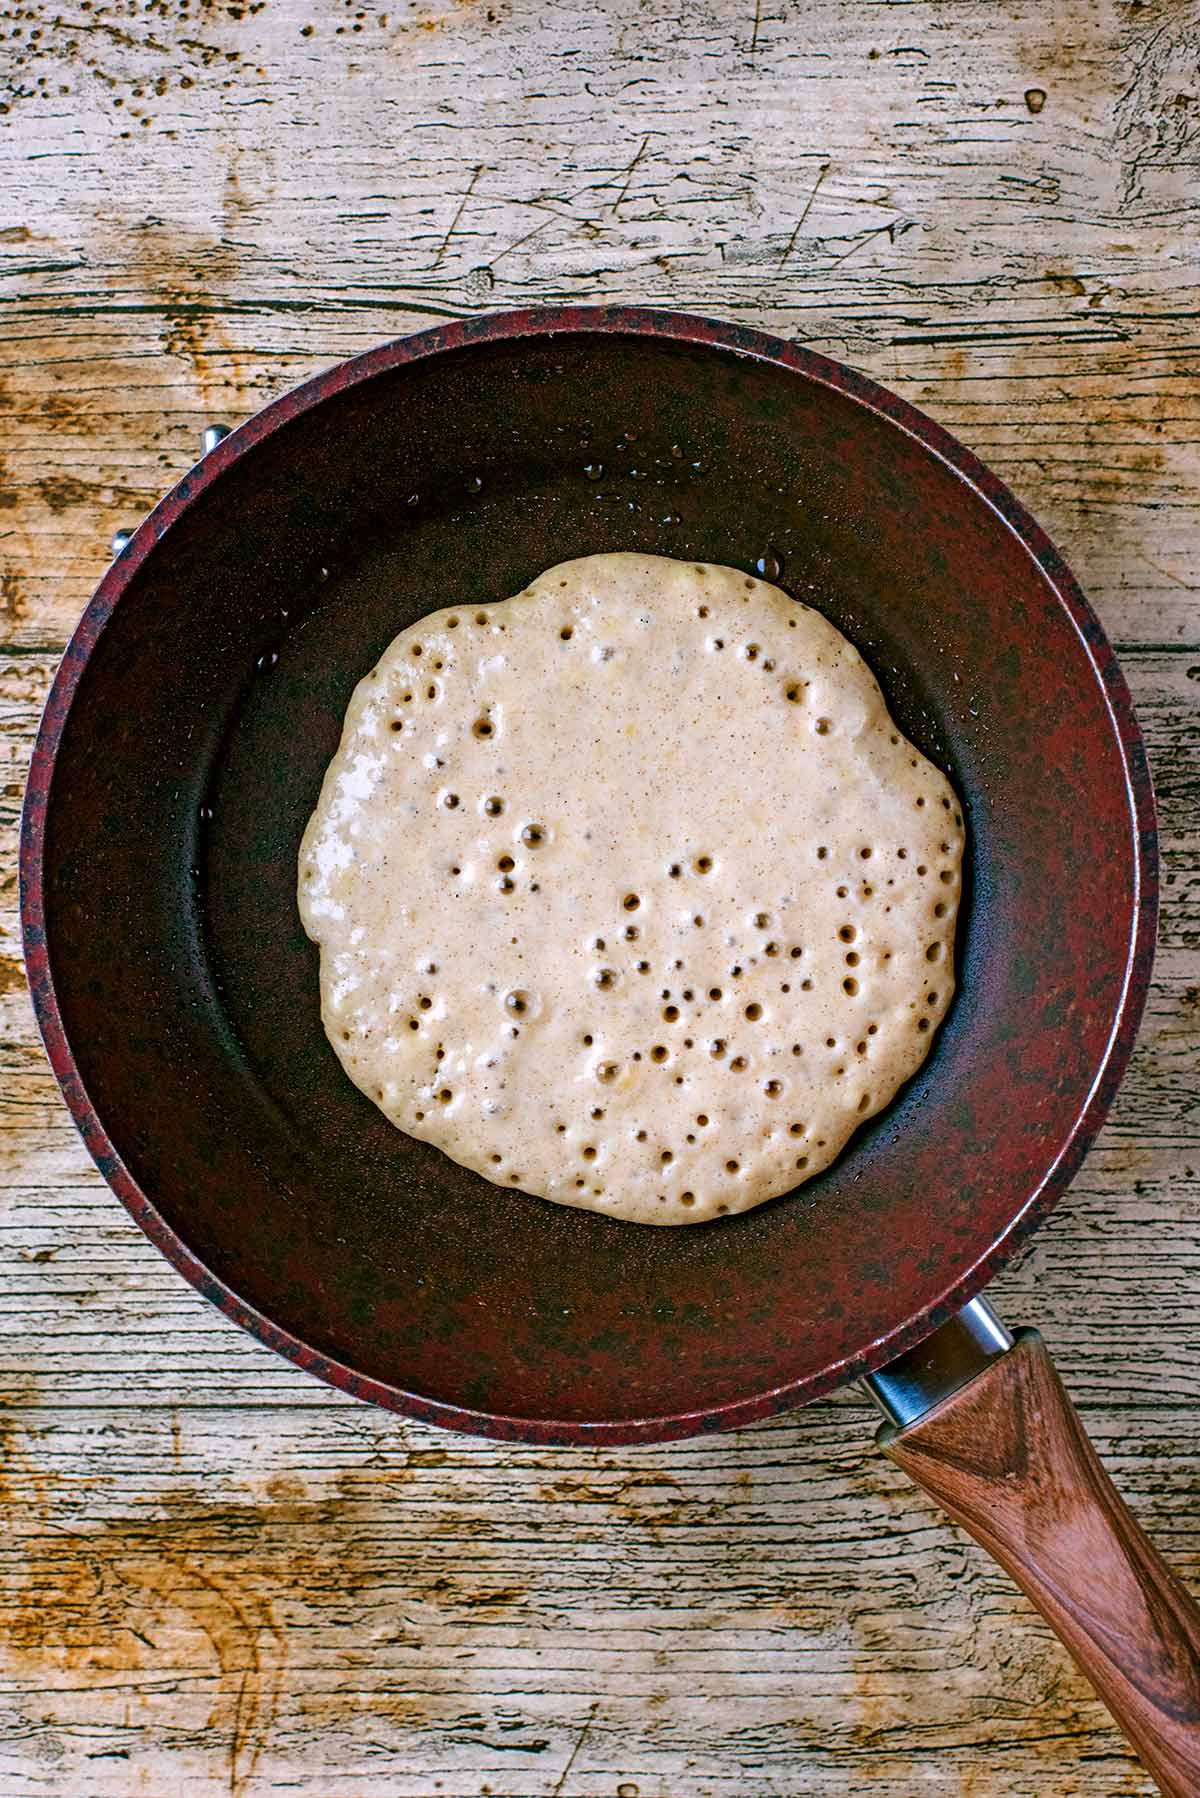 Pancake batter bubbling in a frying pan.